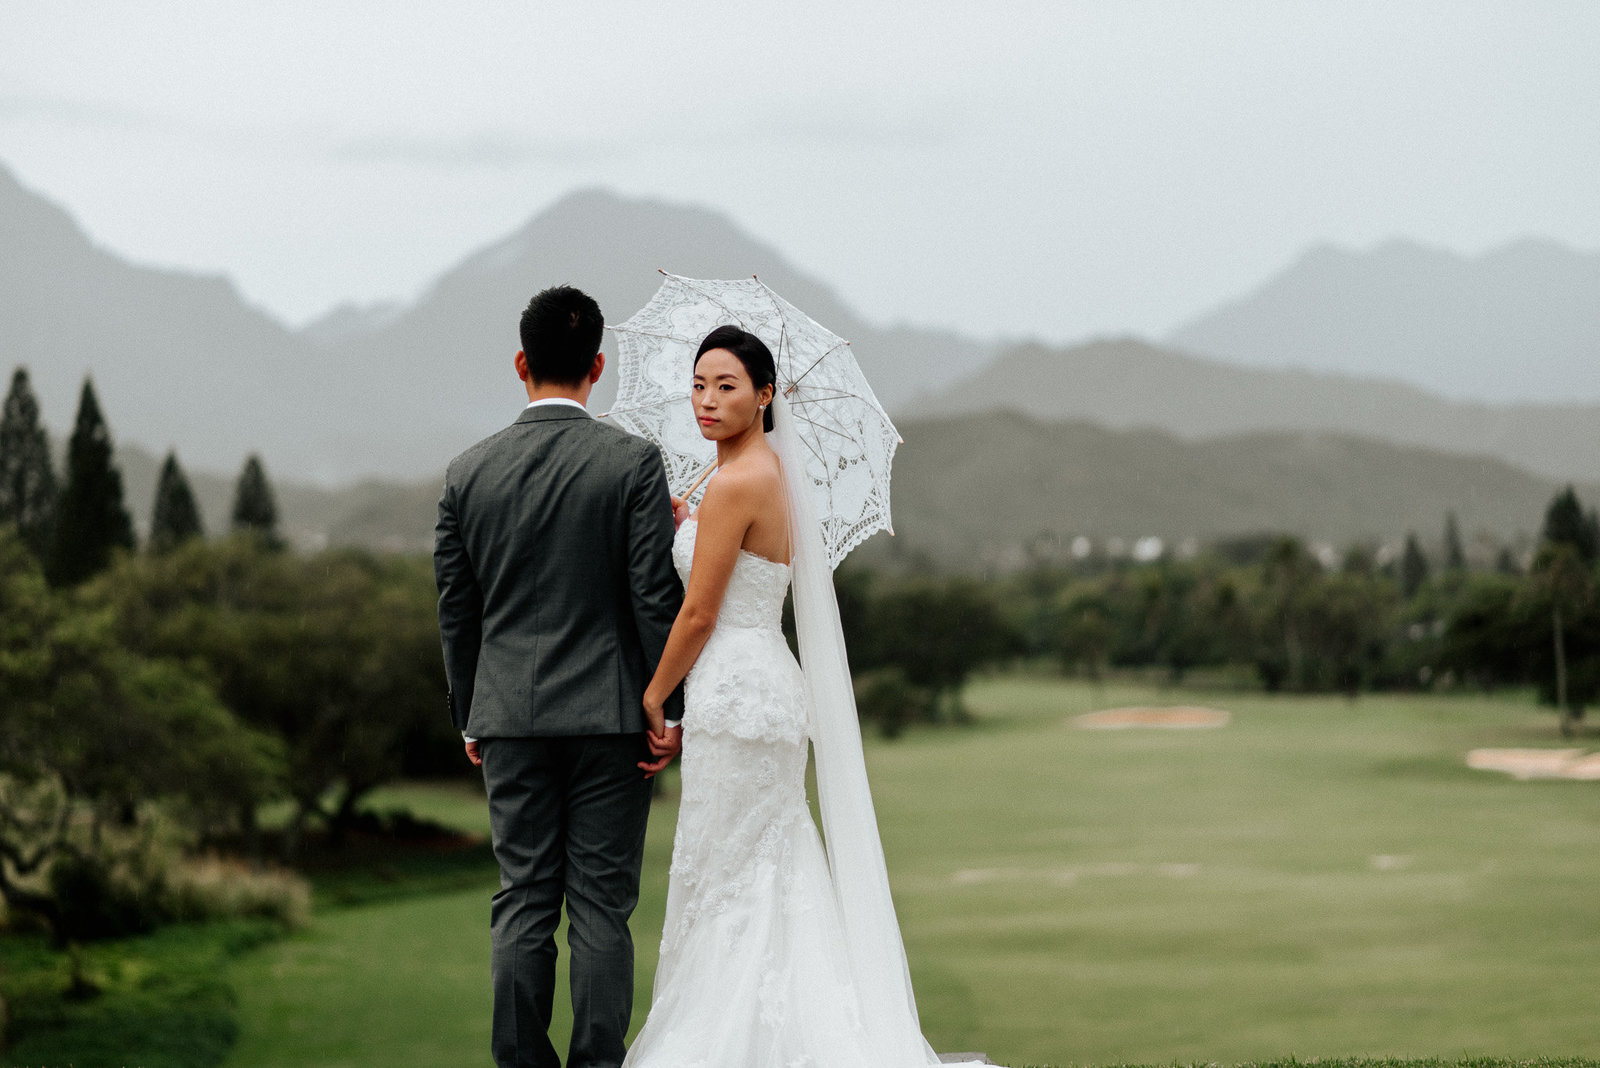 Destination wedding in Oahu Hawaii. Stunning asian bride looks back under lace umbrella.